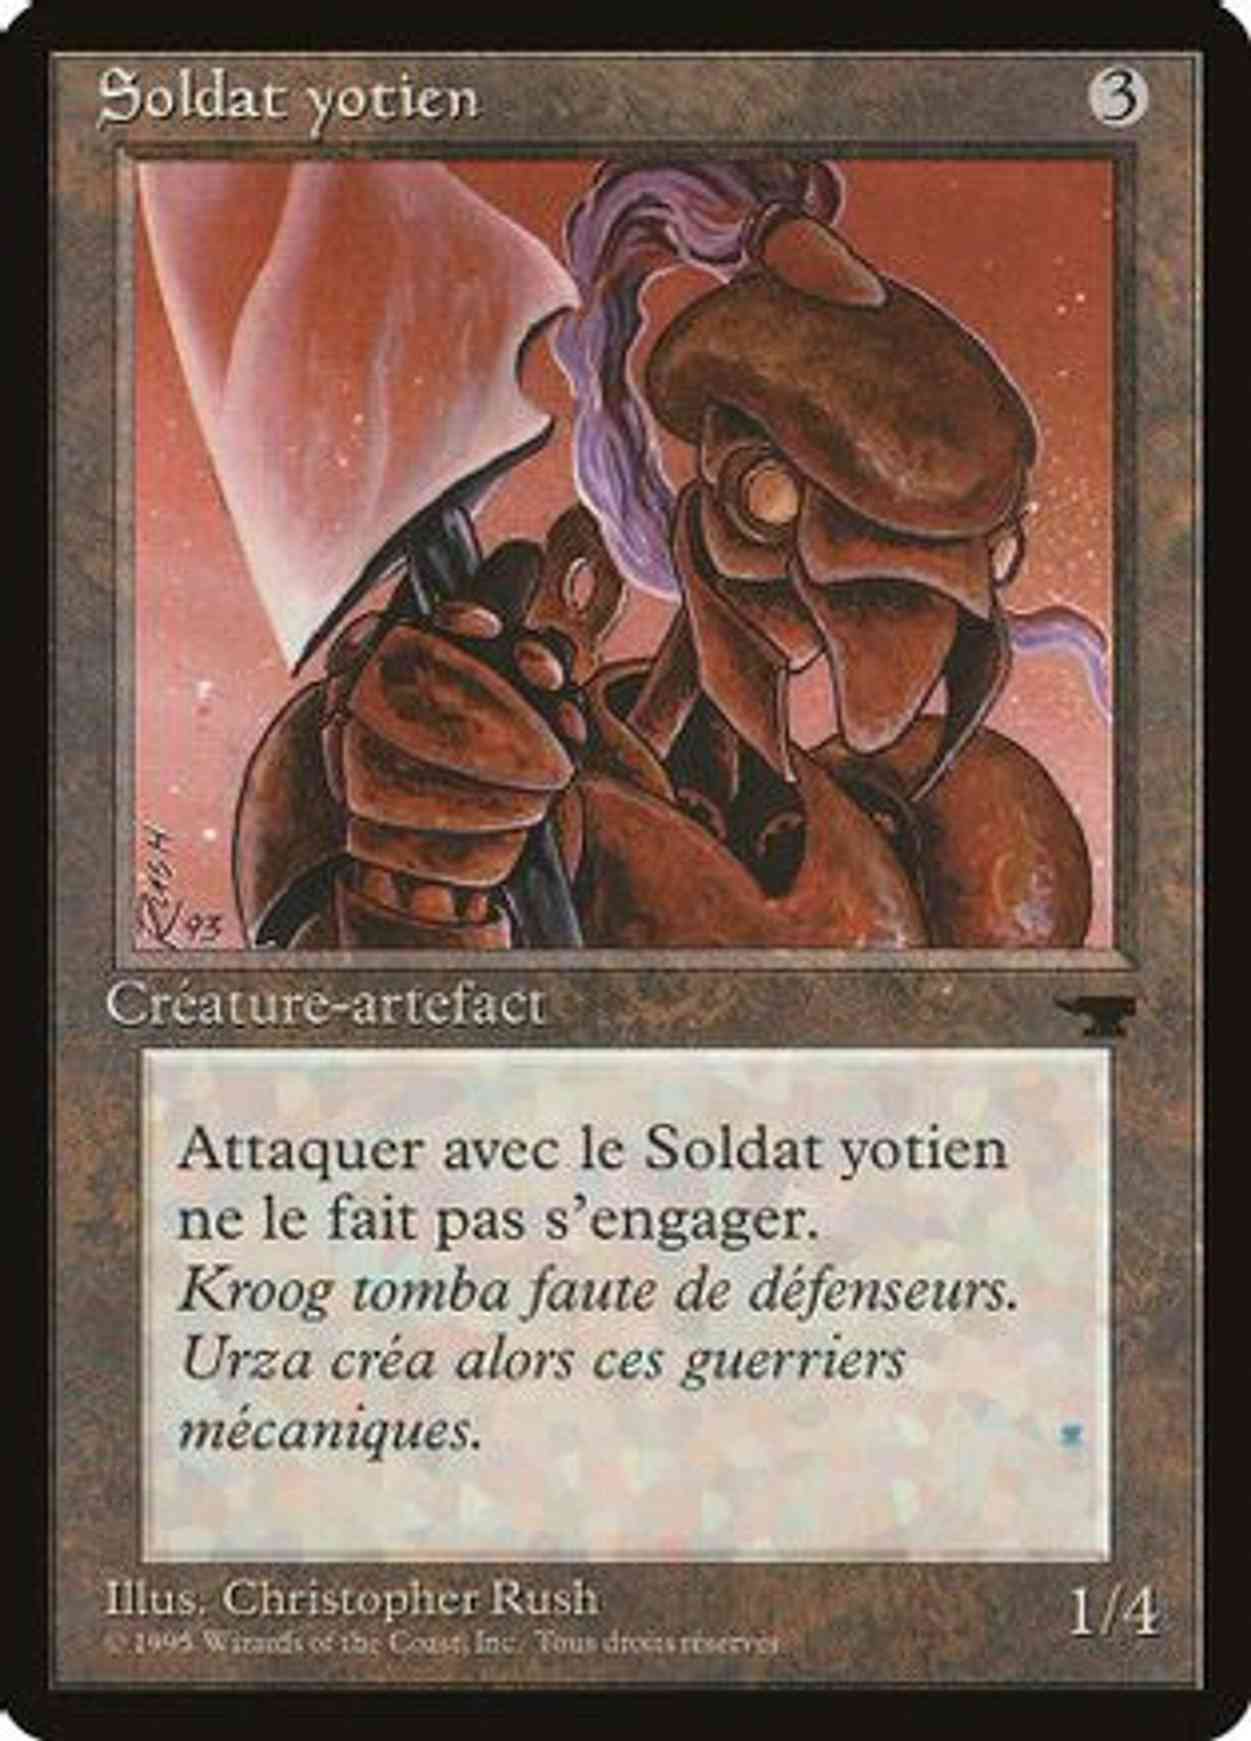 Yotian Soldier (French) - "Soldat yotien" magic card front